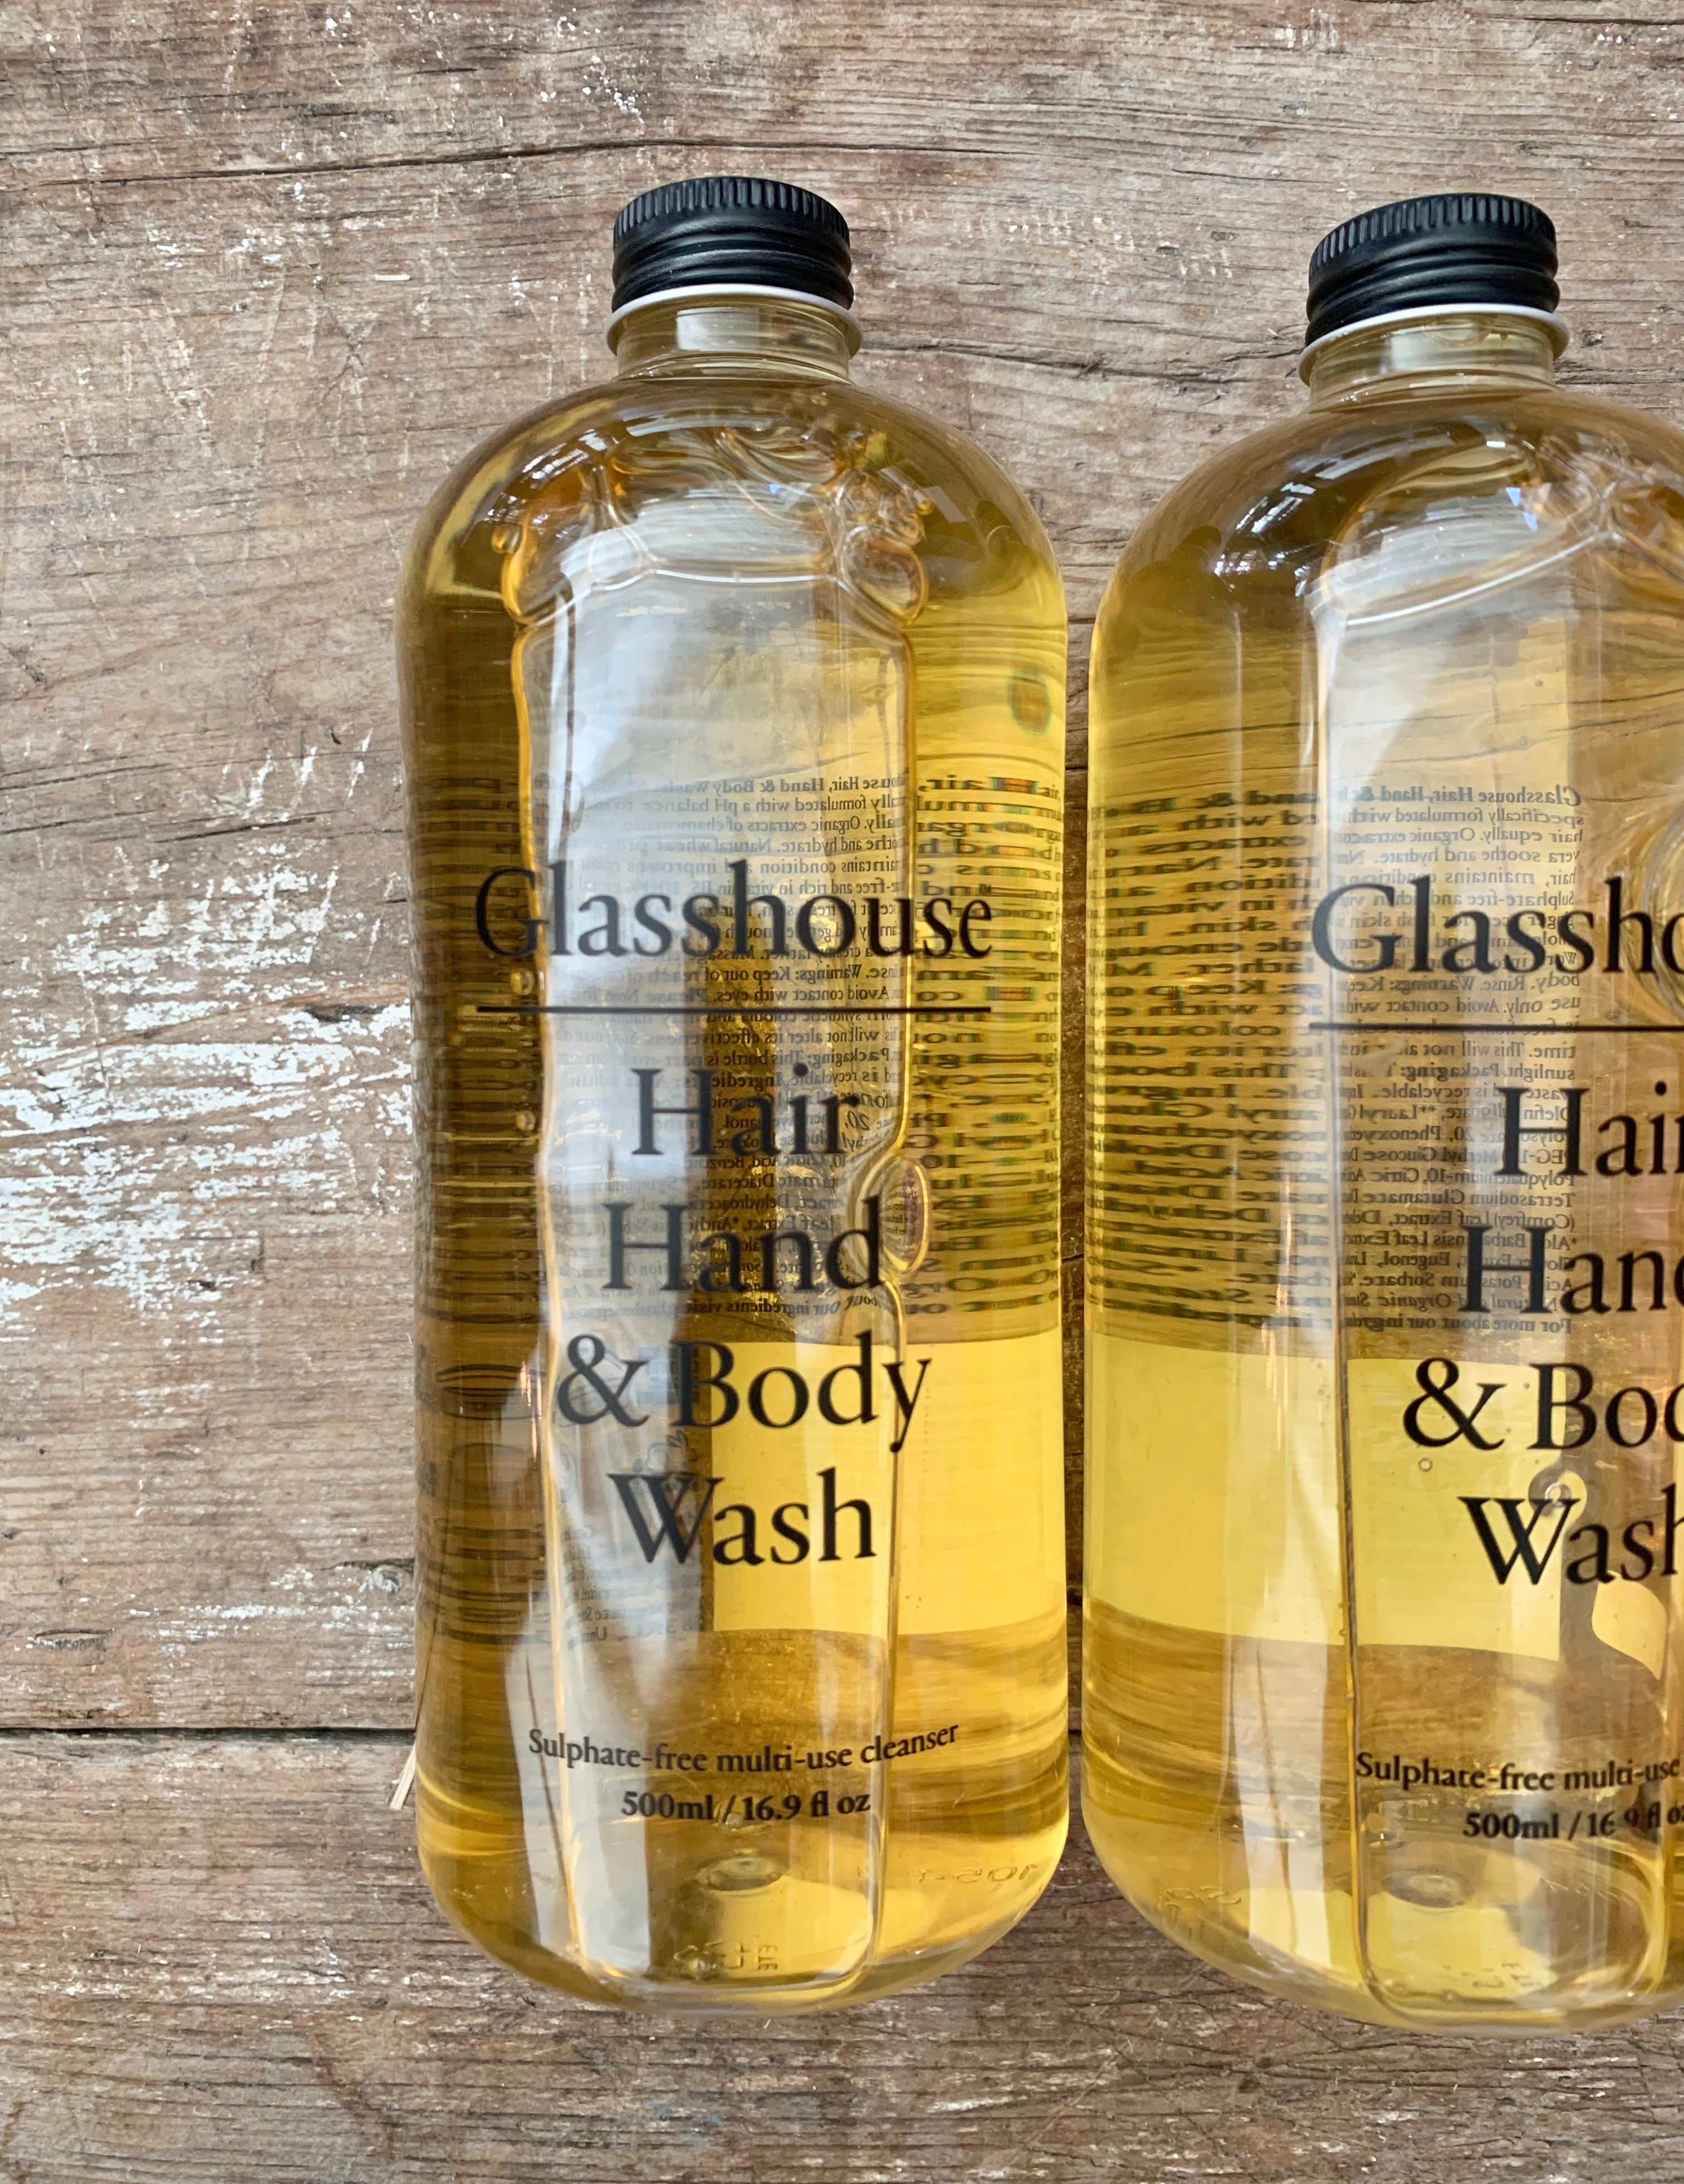 Glasshouse Hair Hand & Body Wash